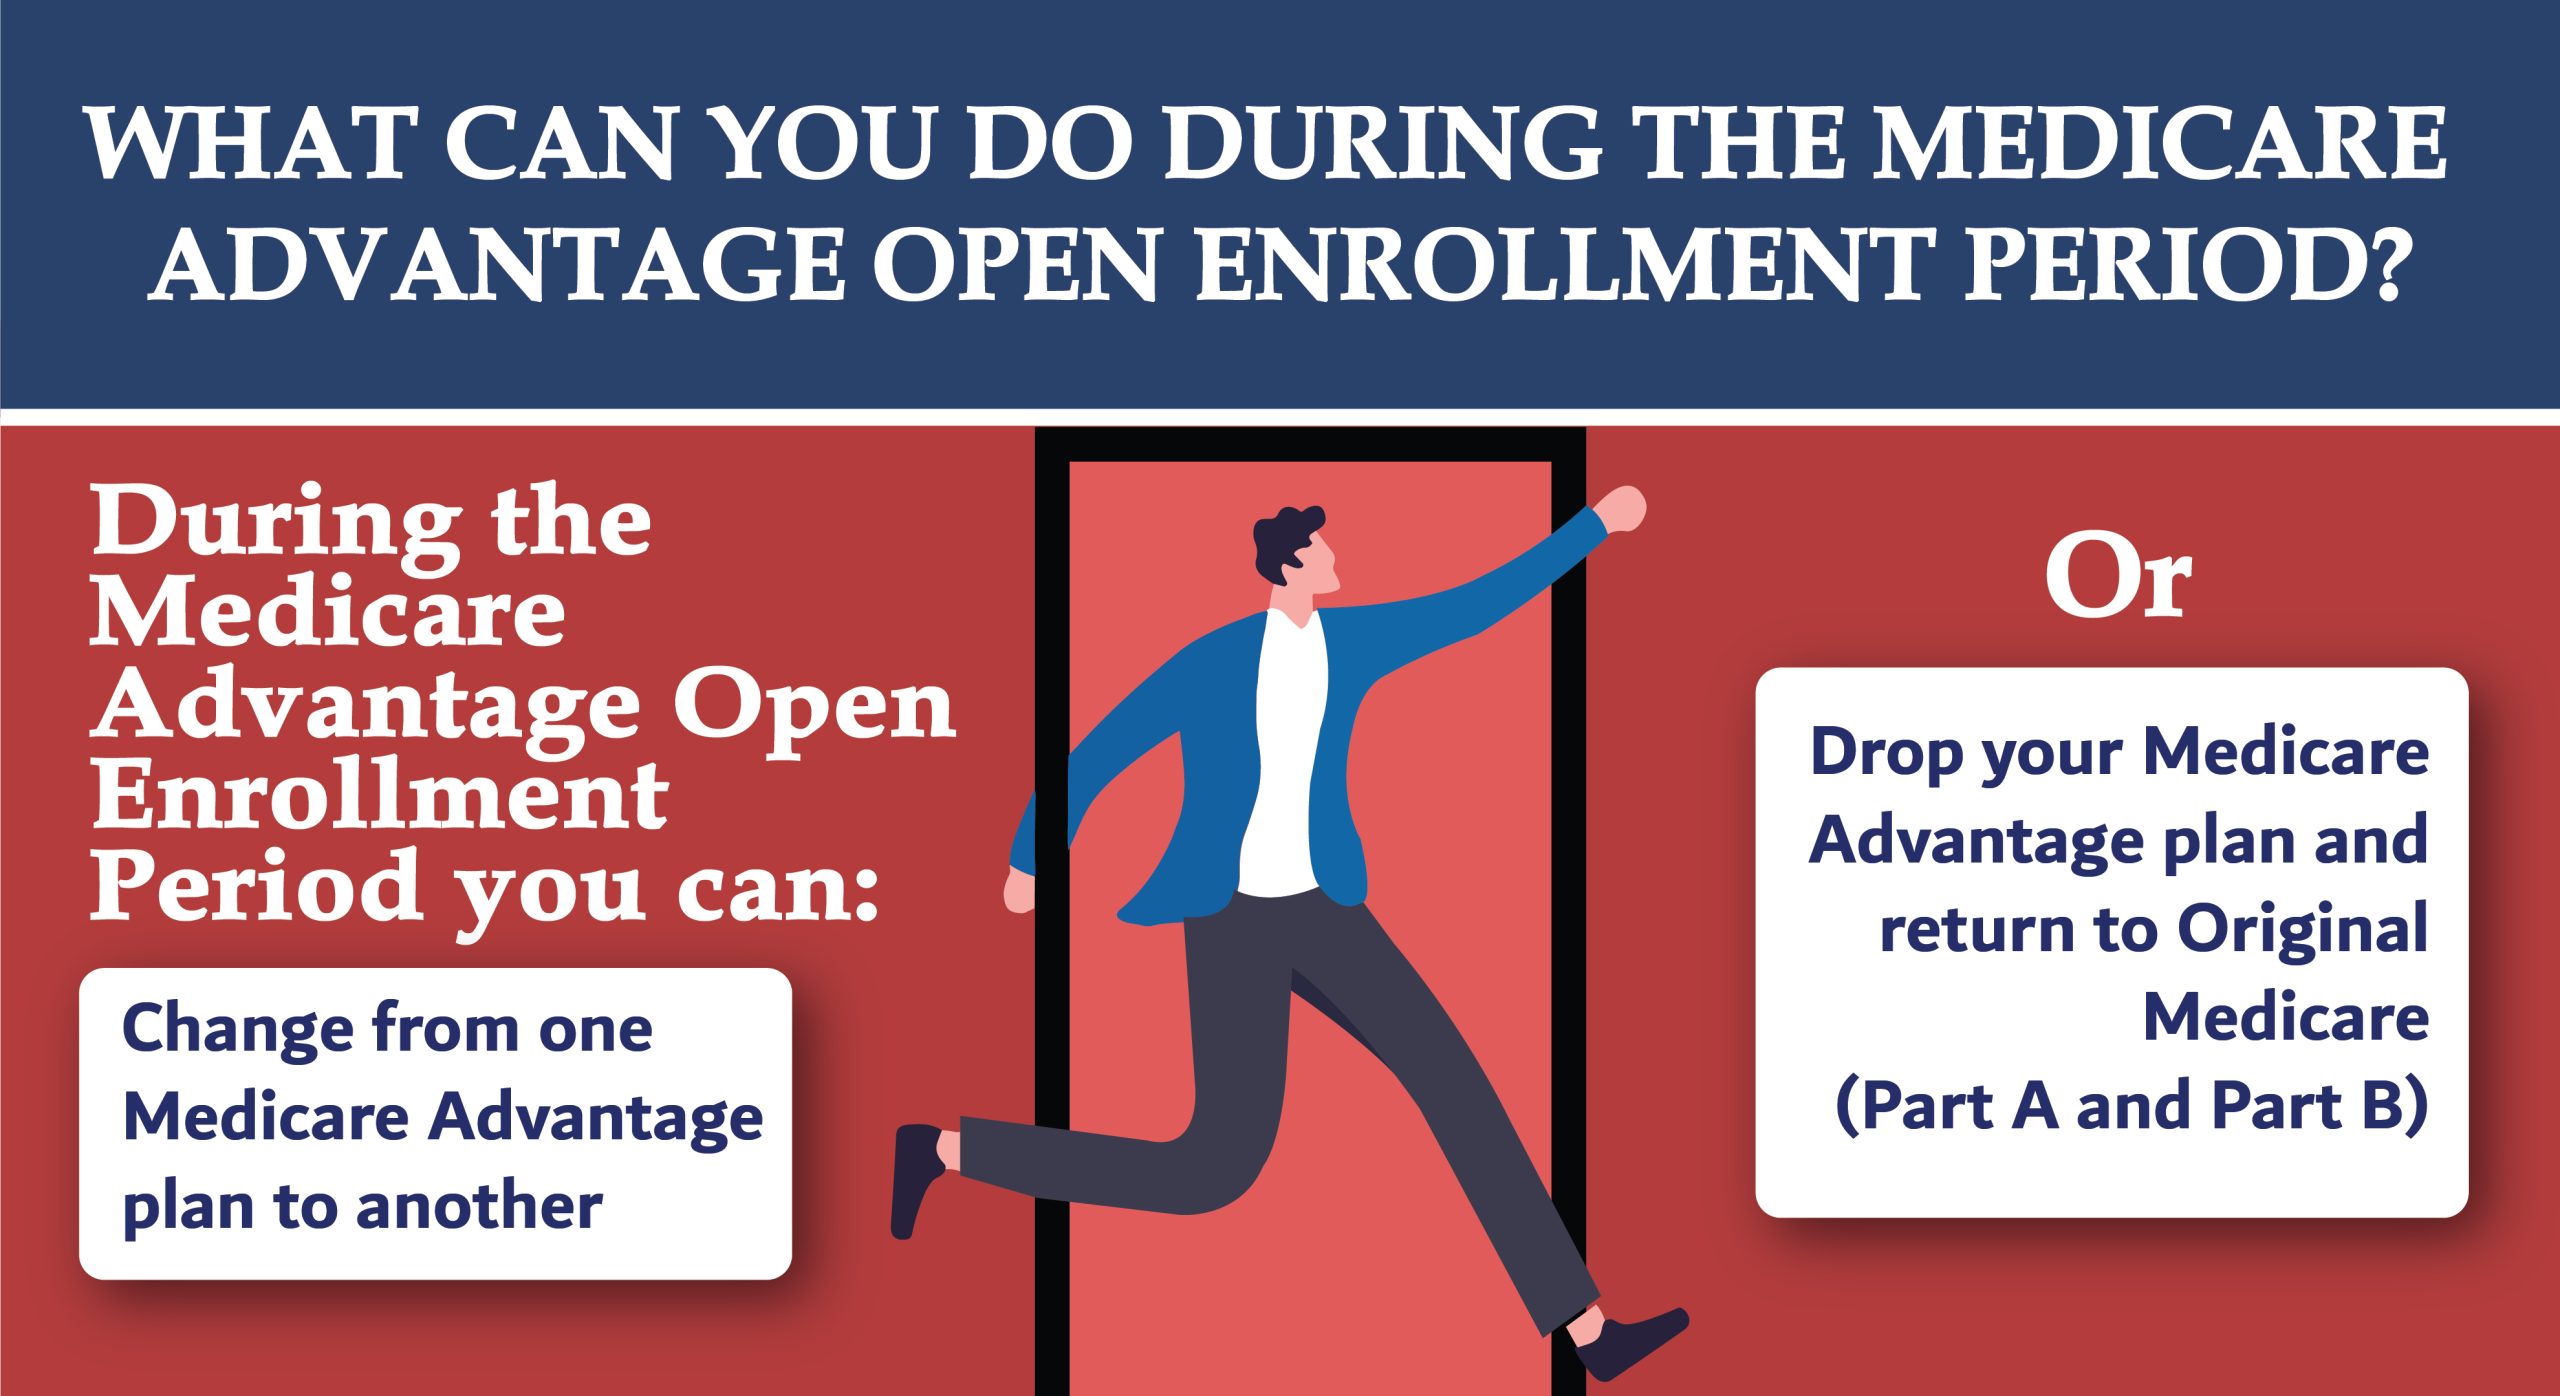 Medicare enrollment period for Medicare advantage members